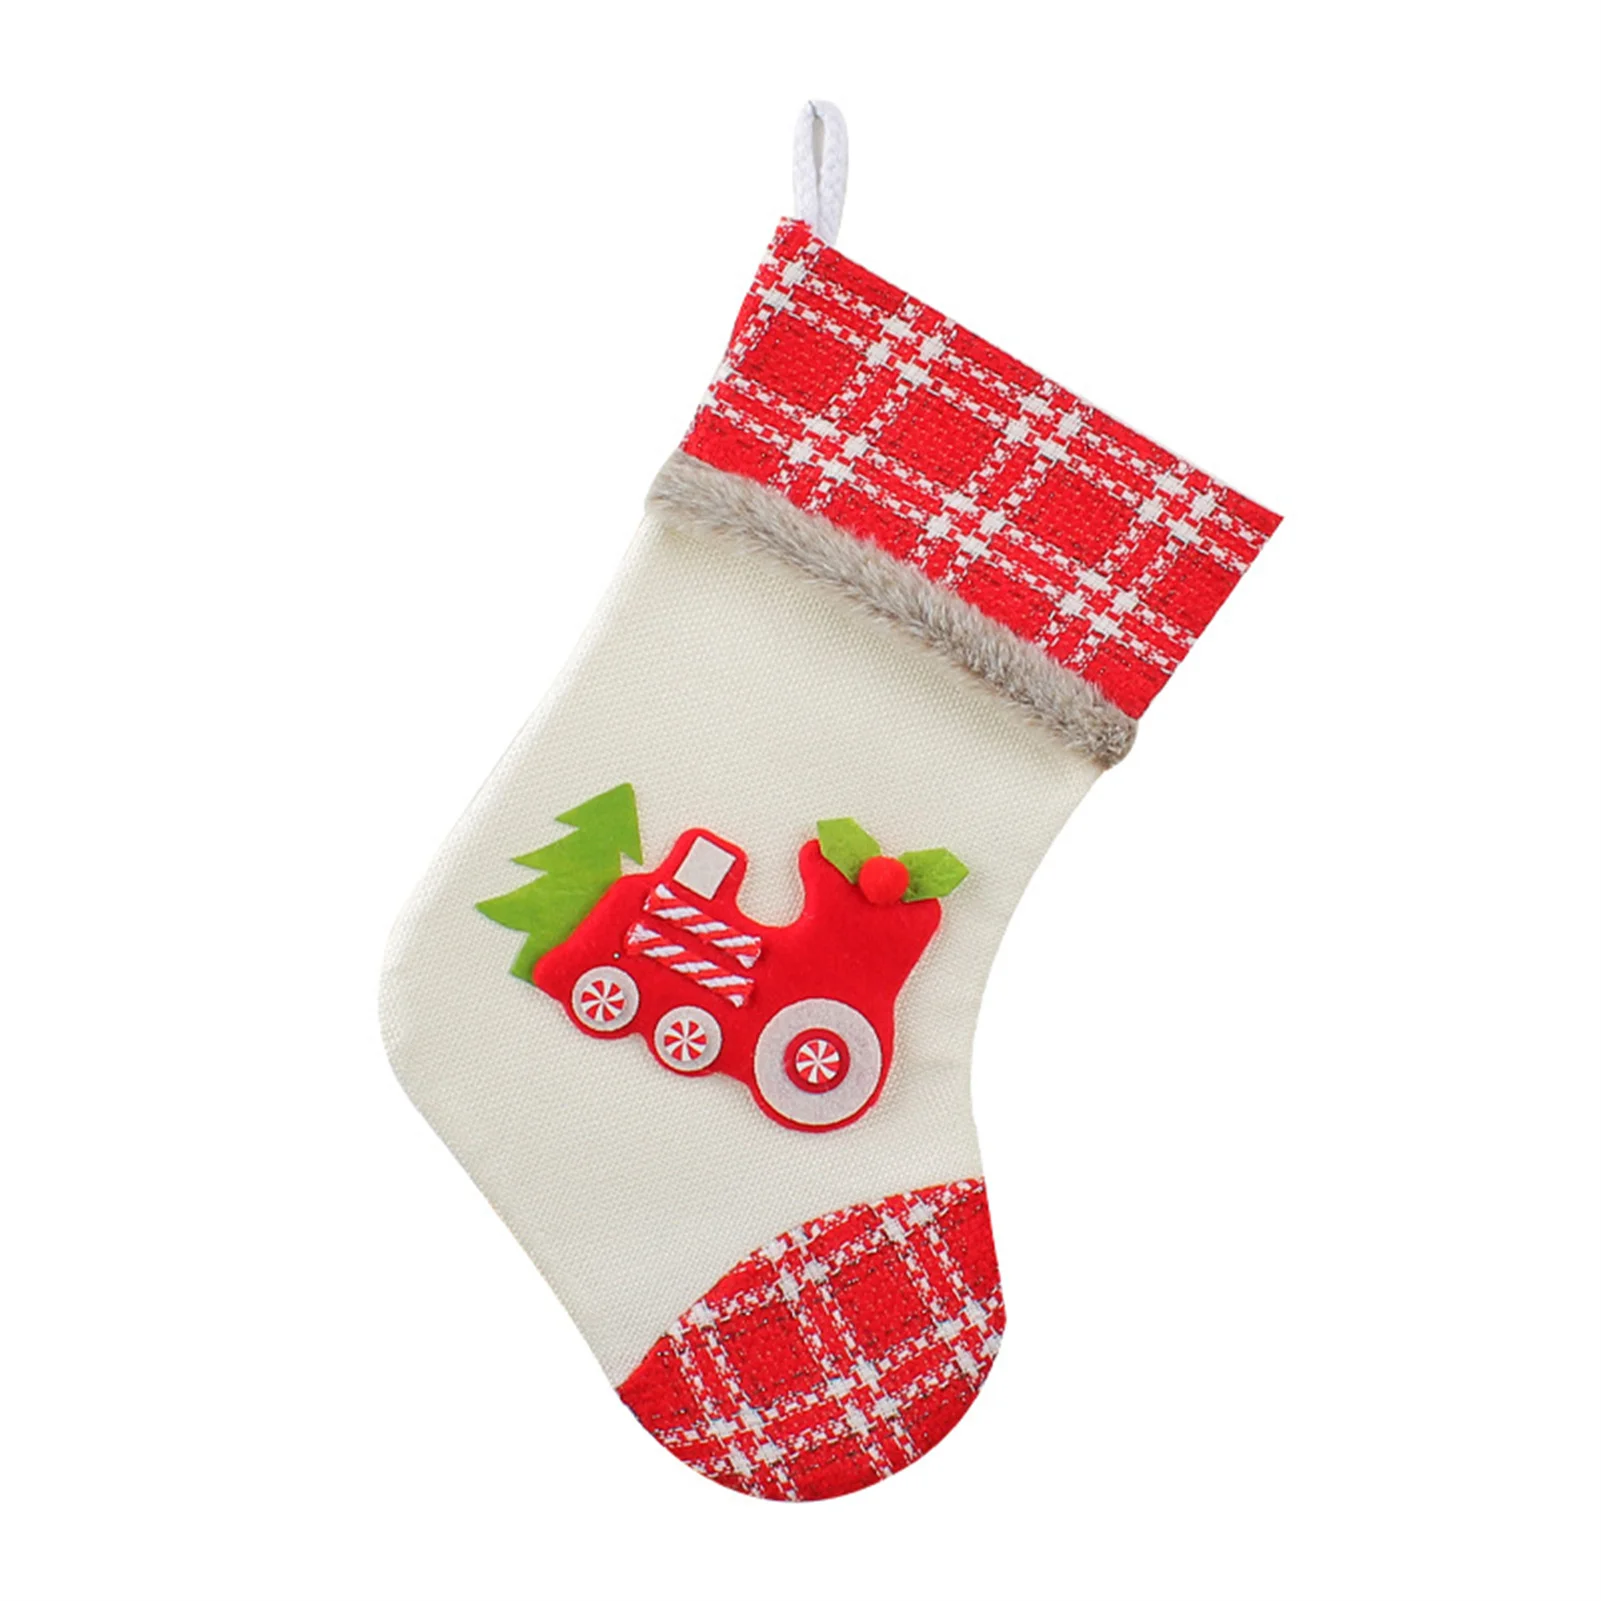 Colorful Christmas Stockings Mini Soft Christmas Stockings for Party Home Hanging Decor SDI99